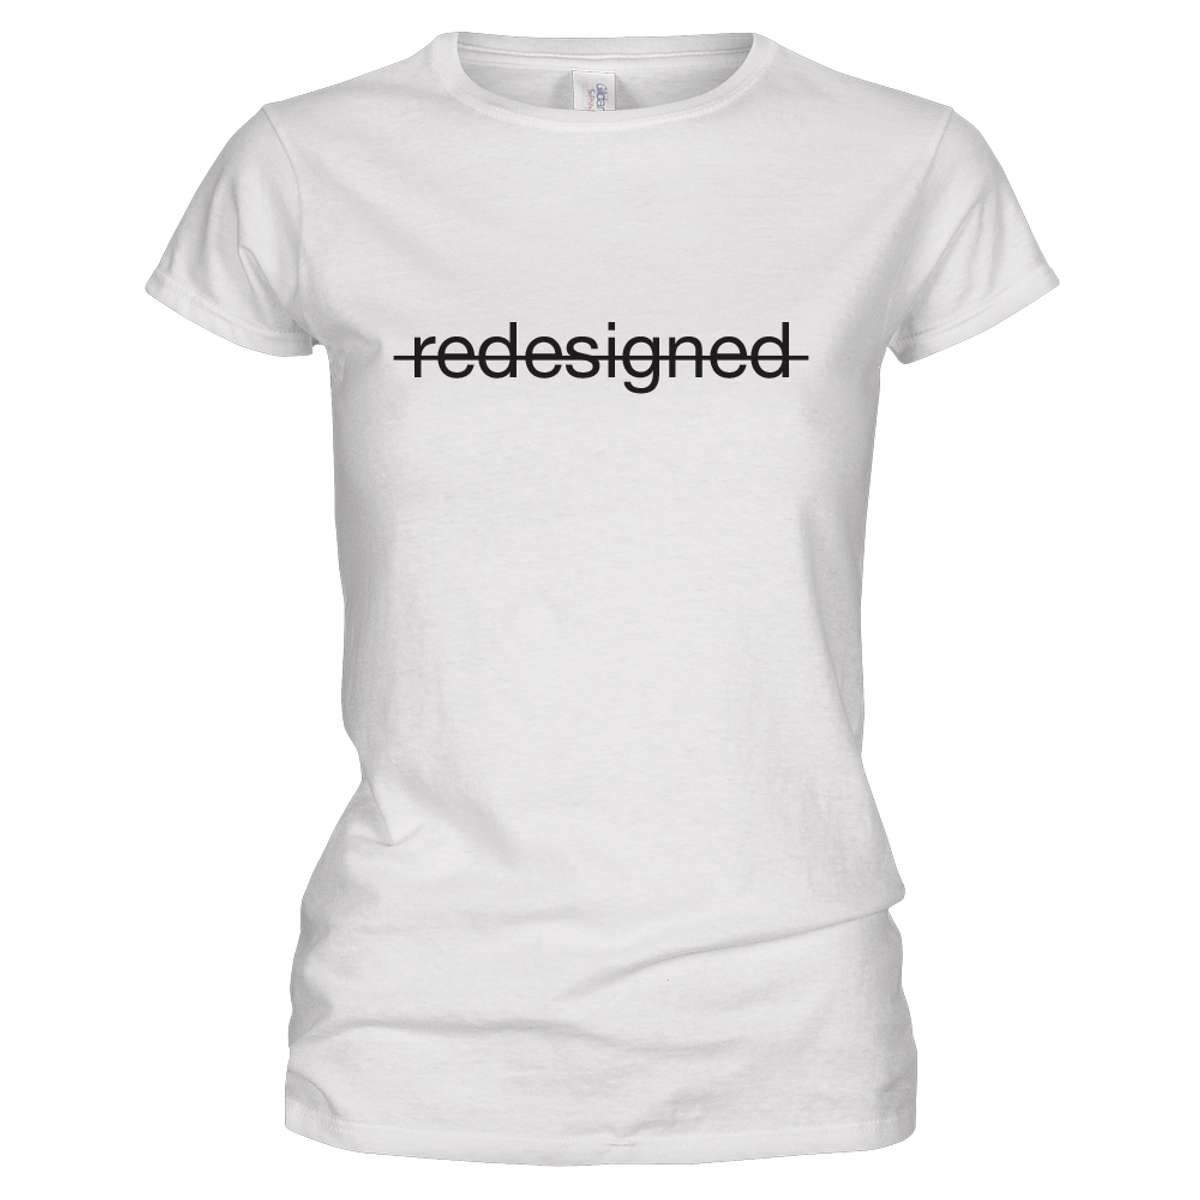 Redesigned T-Shirt (Women's)